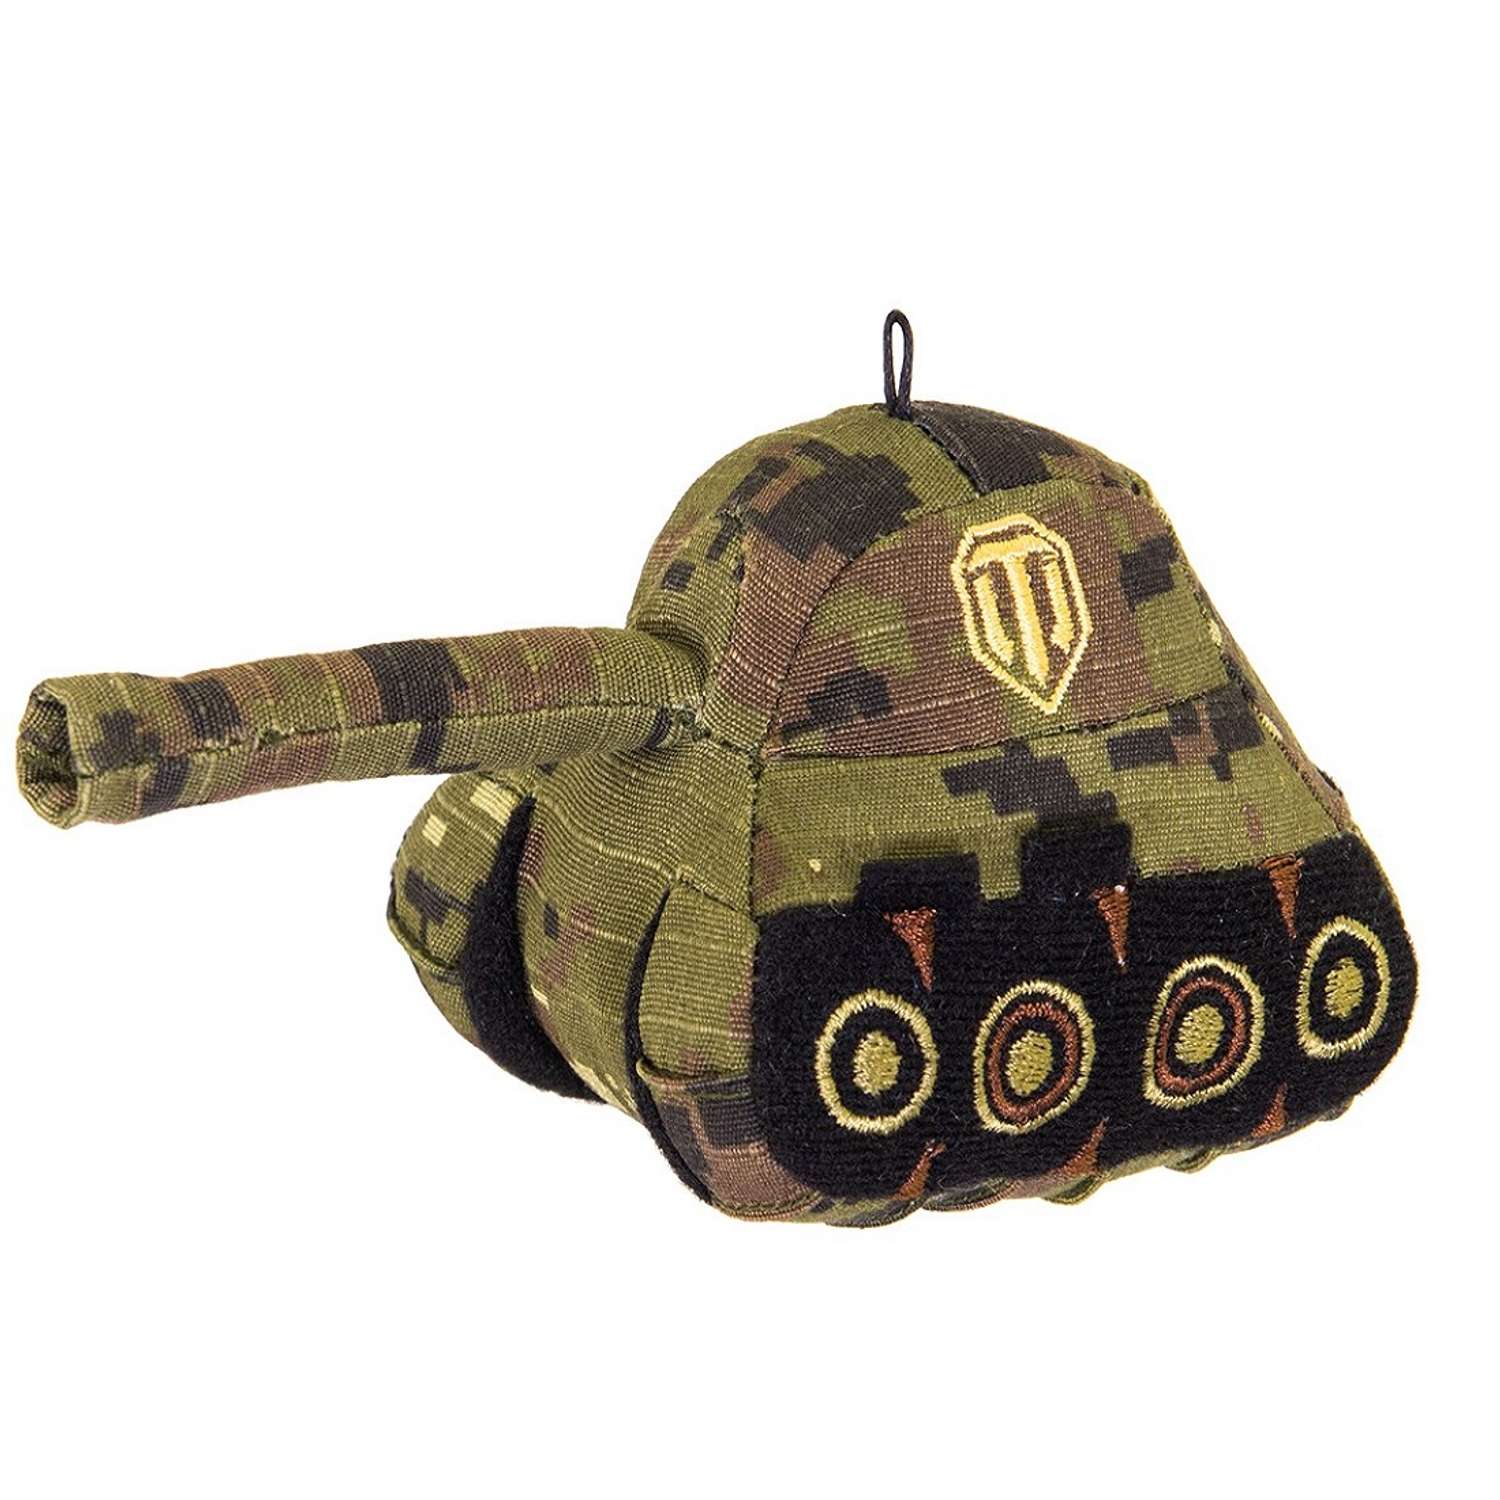 Мягкая игрушка World of Tanks в виде танка зеленый хаки - фото 1